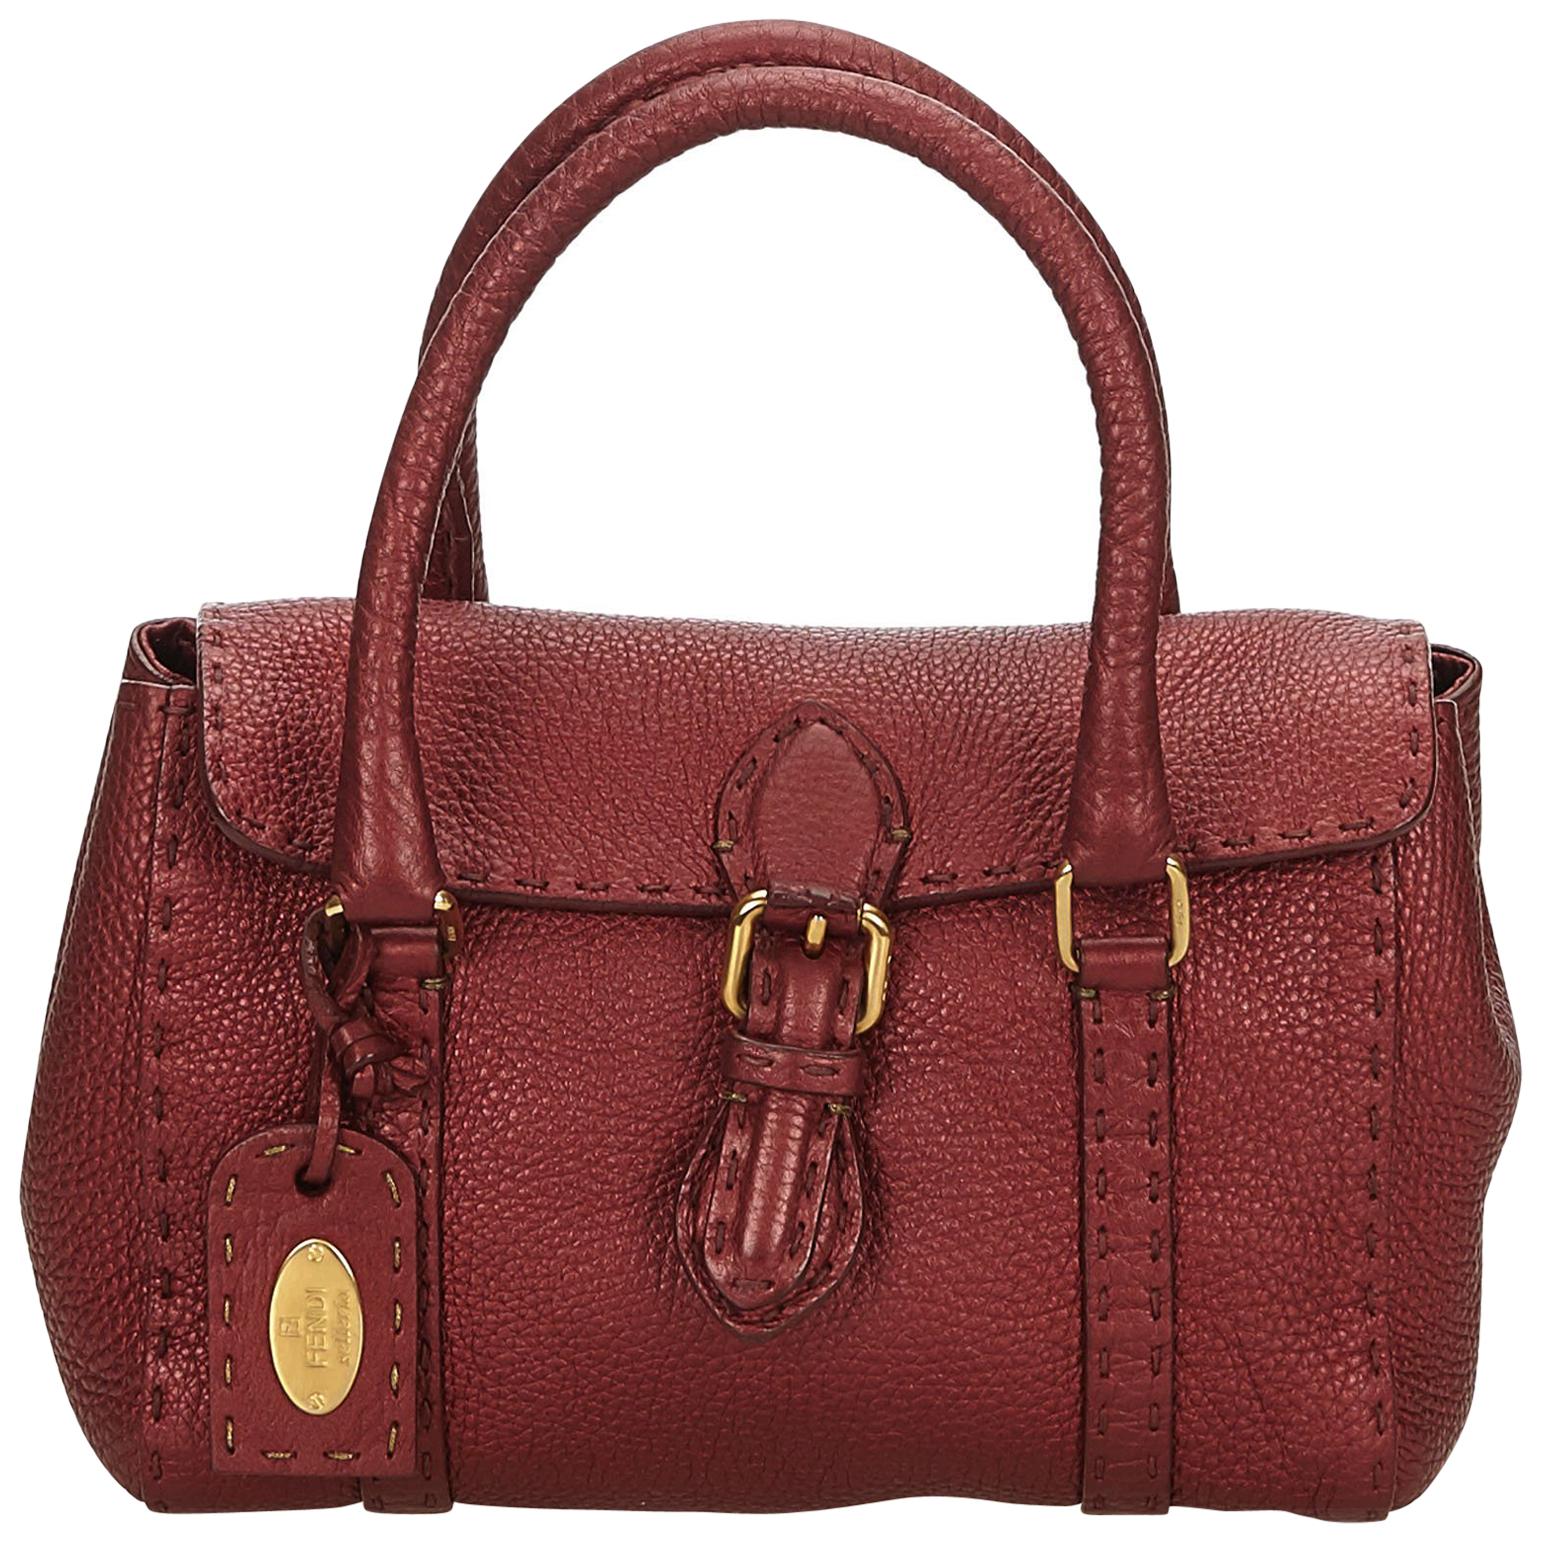 Fendi Red and Bordeau Mini Linda Handbag For Sale